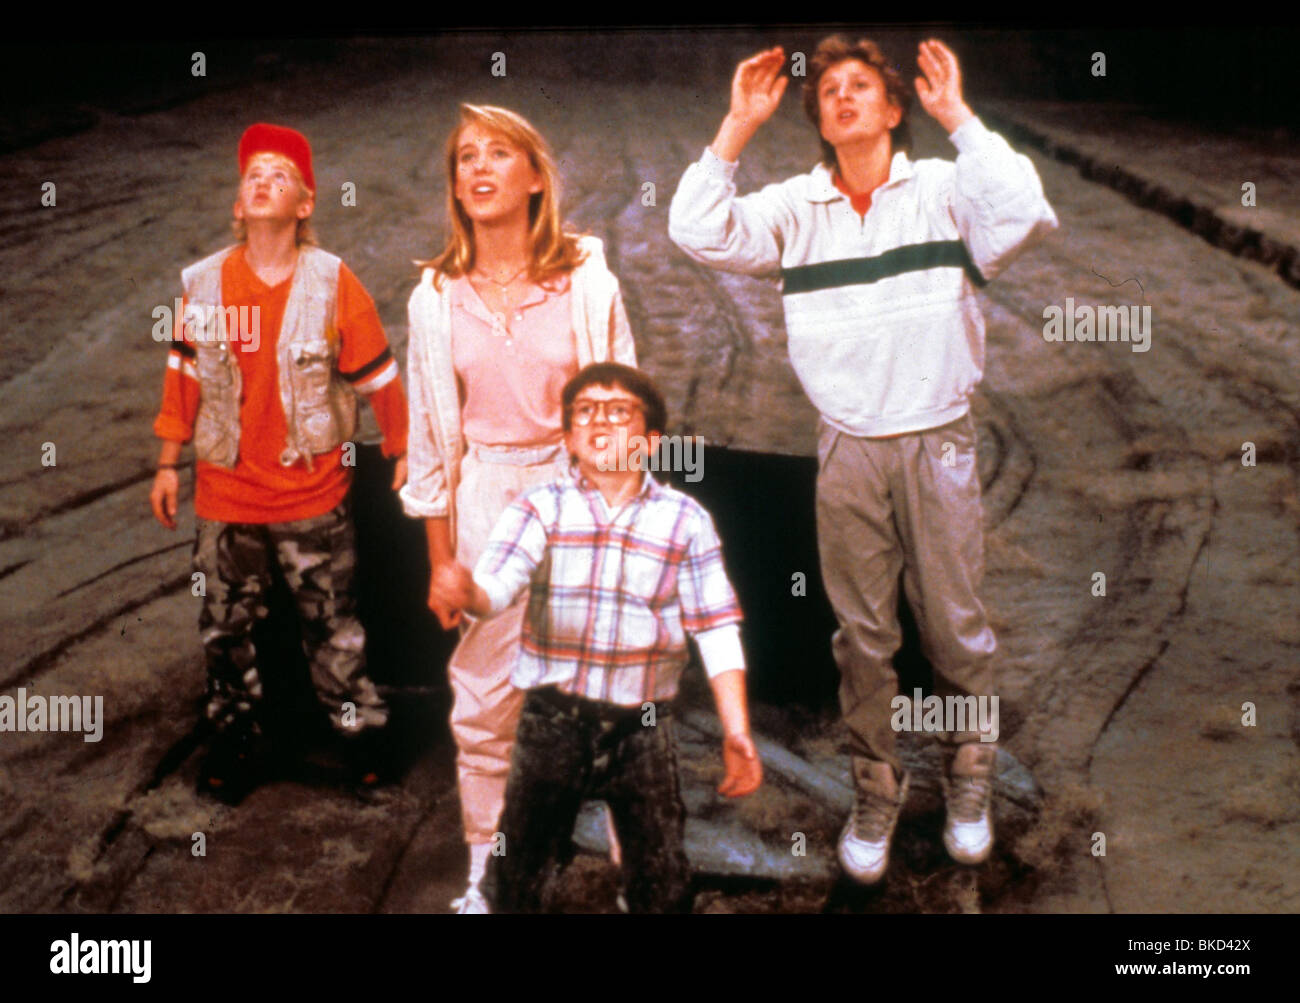 HONEY, I SHRUNK THE KIDS (1989) JARED RUSHTON, AMY O'NEILL, ROBERT OLIVERI, THOMAS BROWN HSK 062 Stock Photo